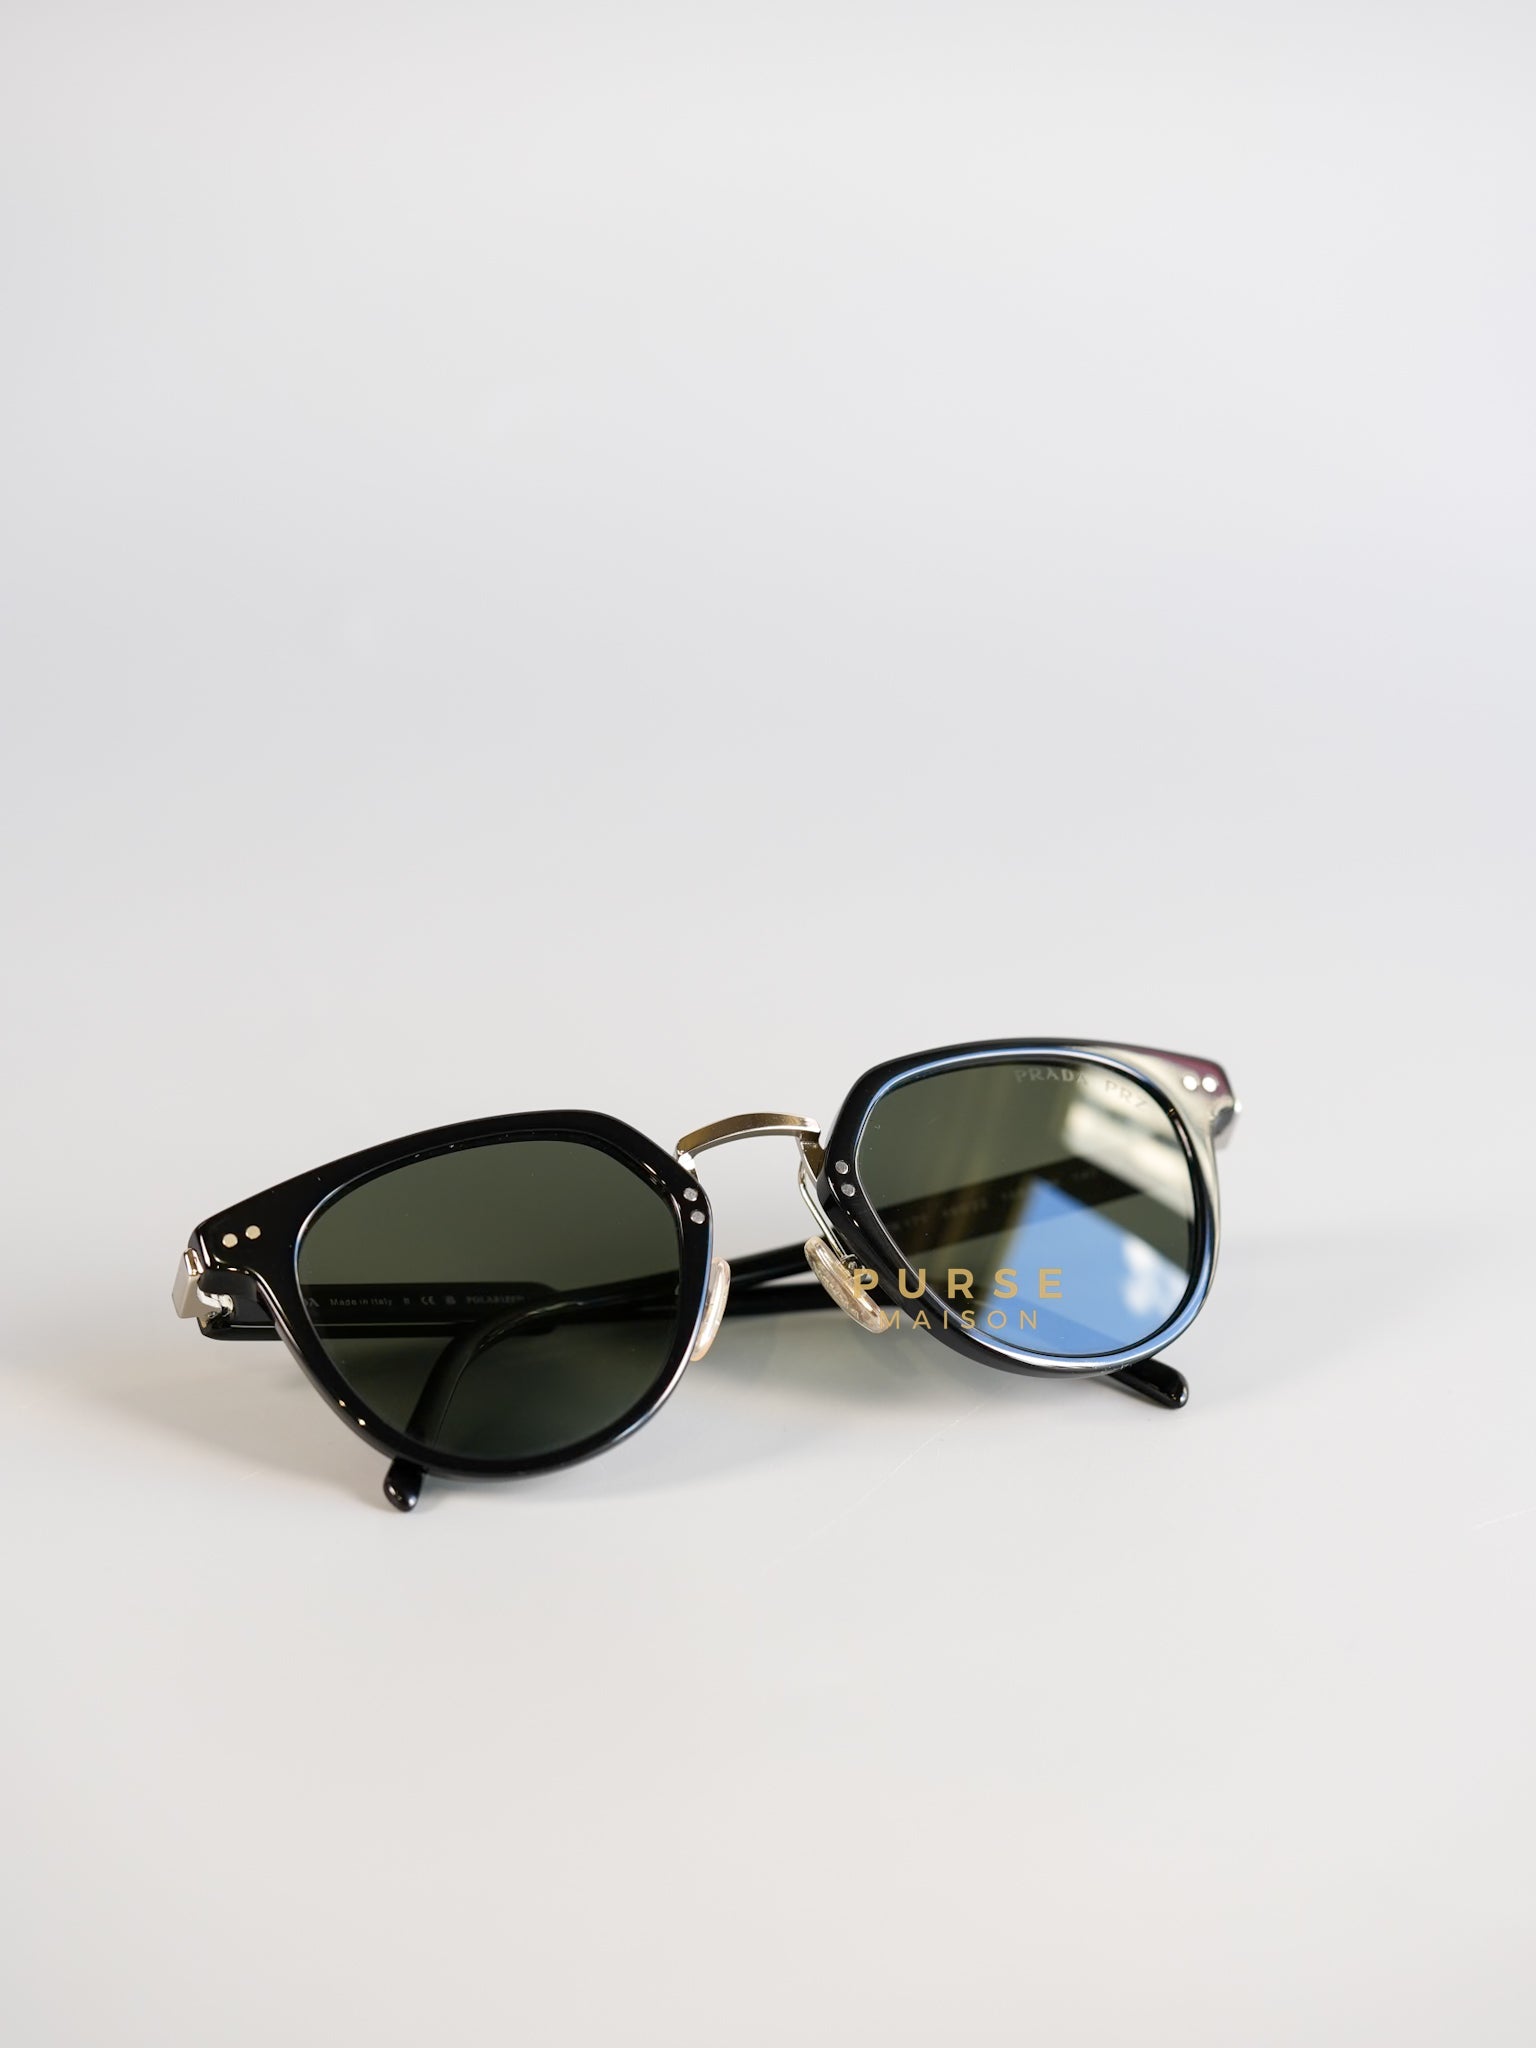 Occhiali Da Sole Frames (SPR-17Y) in Black Sunglasses | Purse Maison Luxury Bags Shop